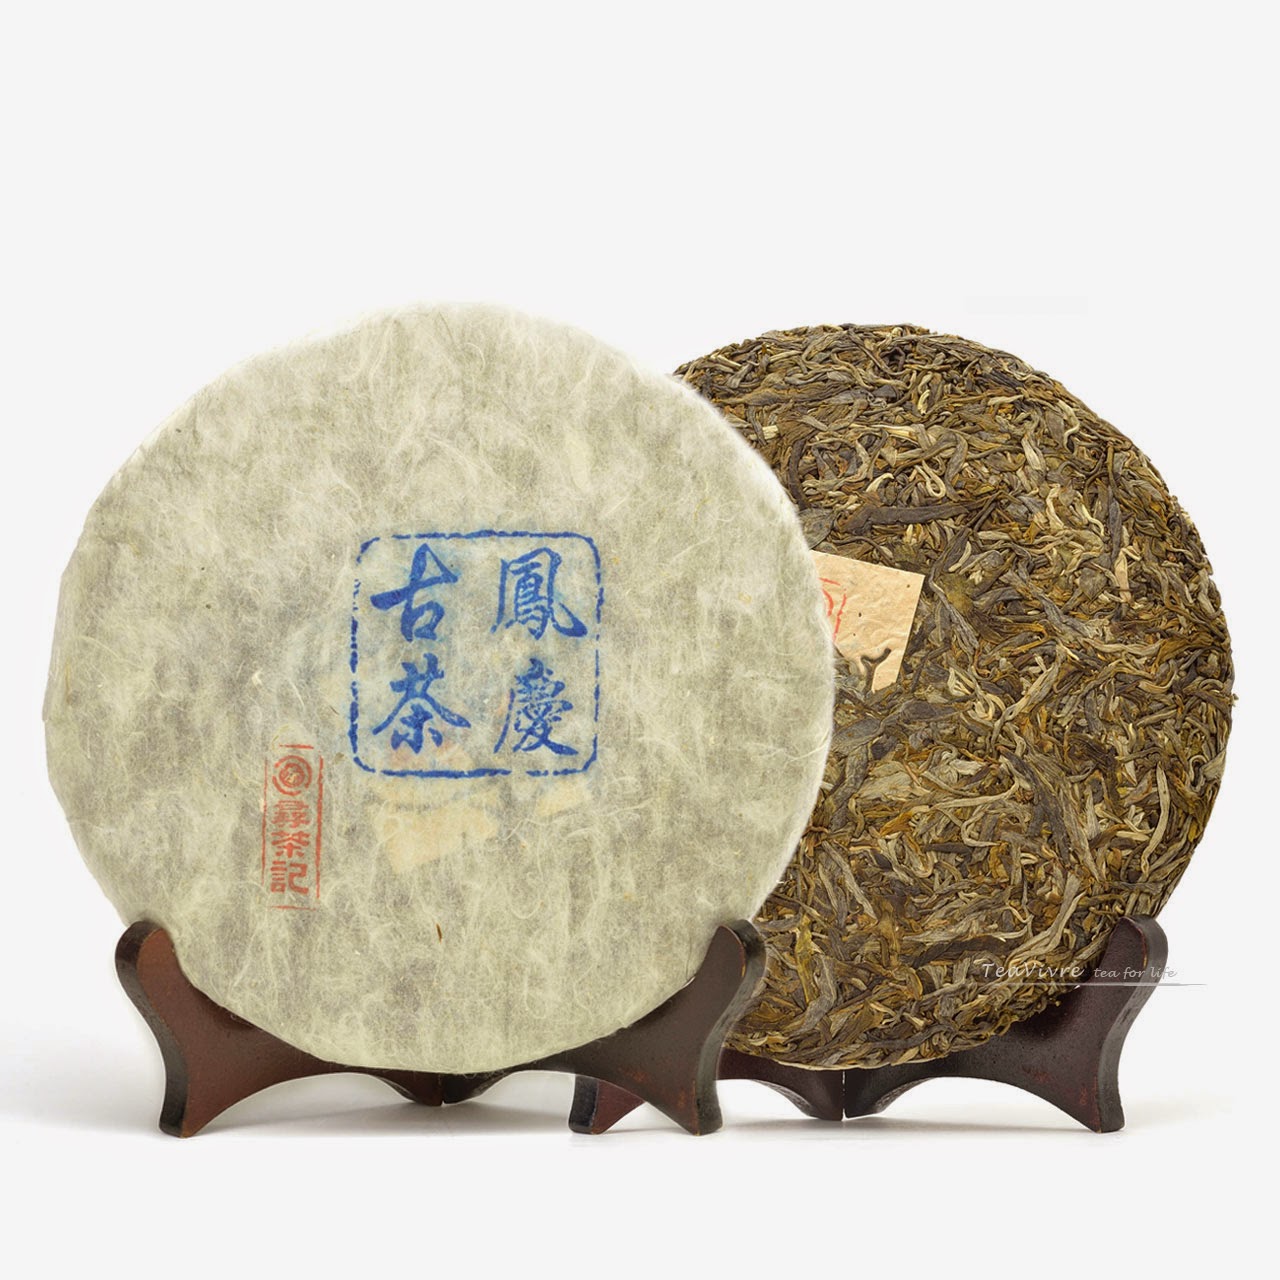 Teavivre Fengqing Ancient Tree Raw Pu-er Cake 2014